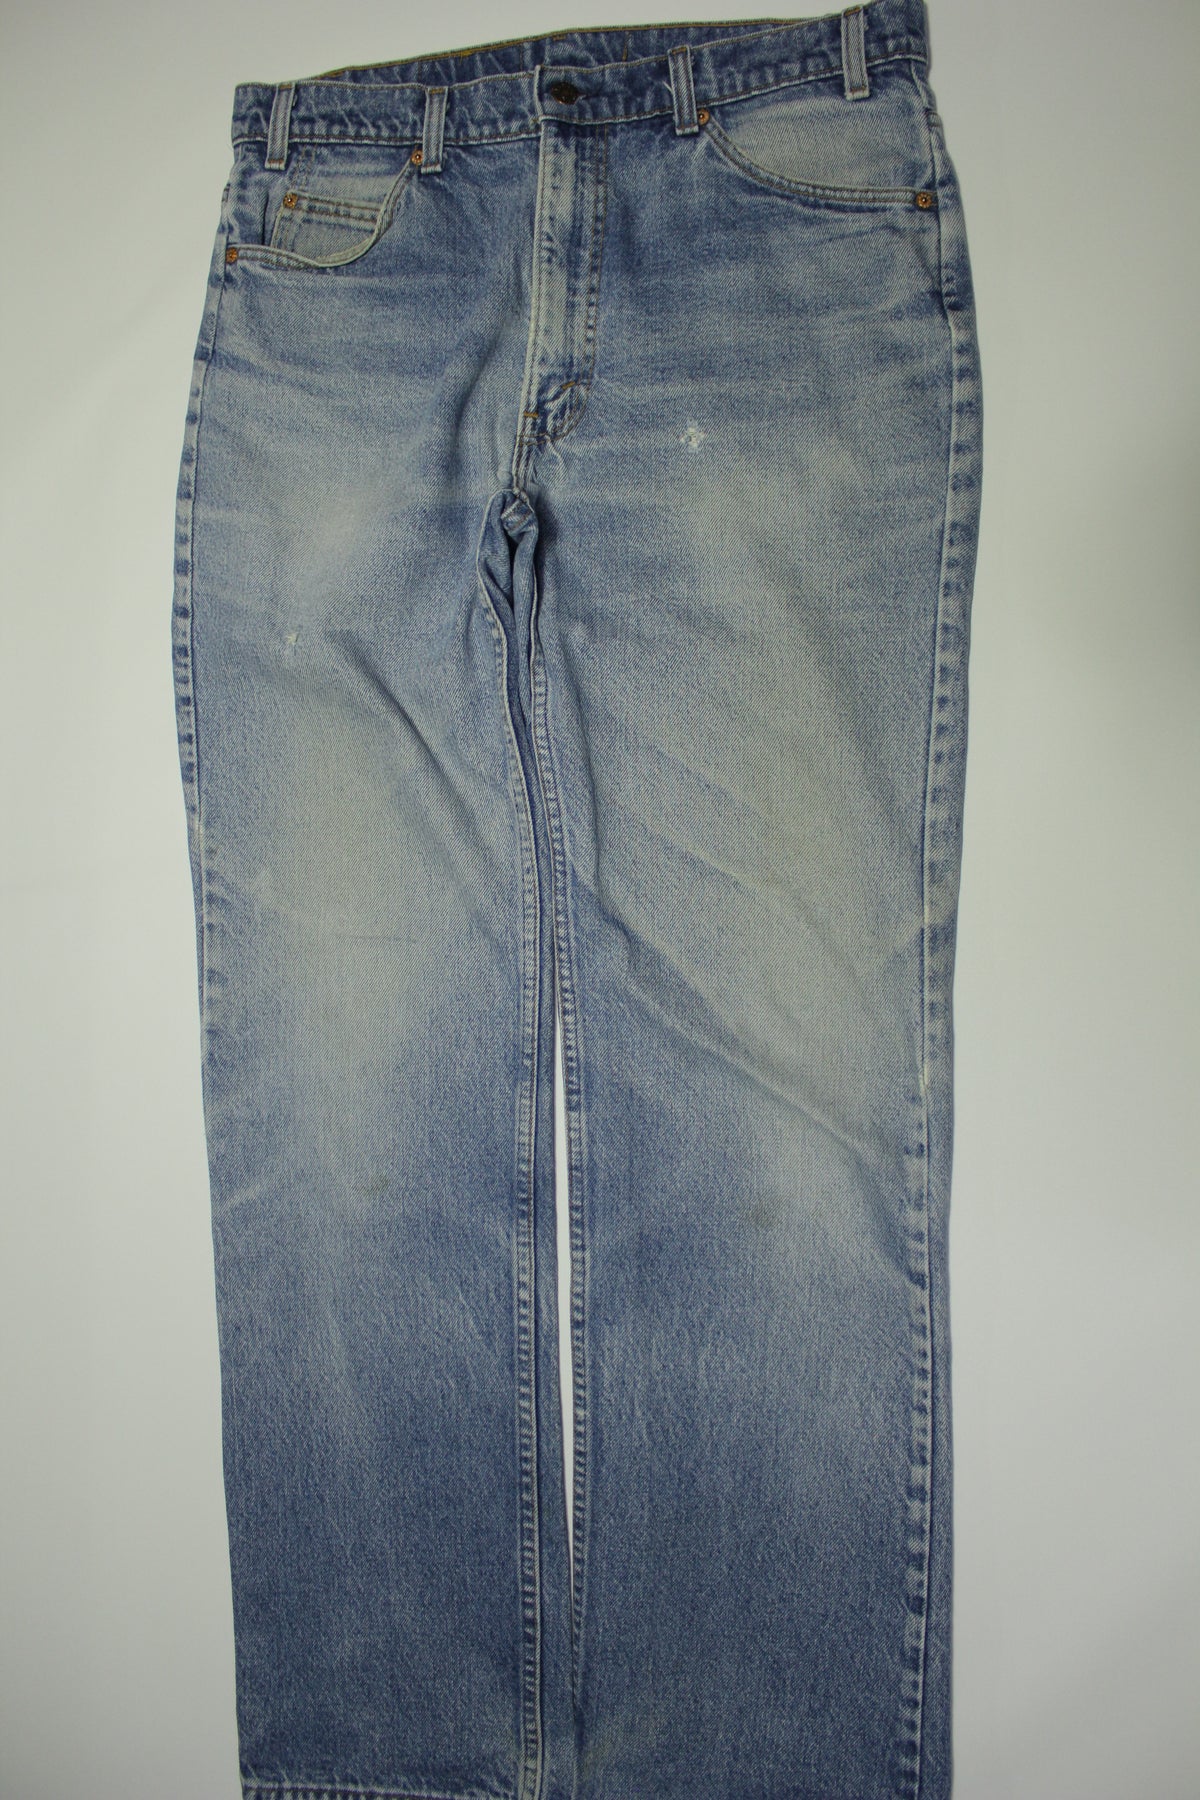 Levis 575 20507 0217 Orange Tab Vintage 80s Denim Grunge Rocker Jeans